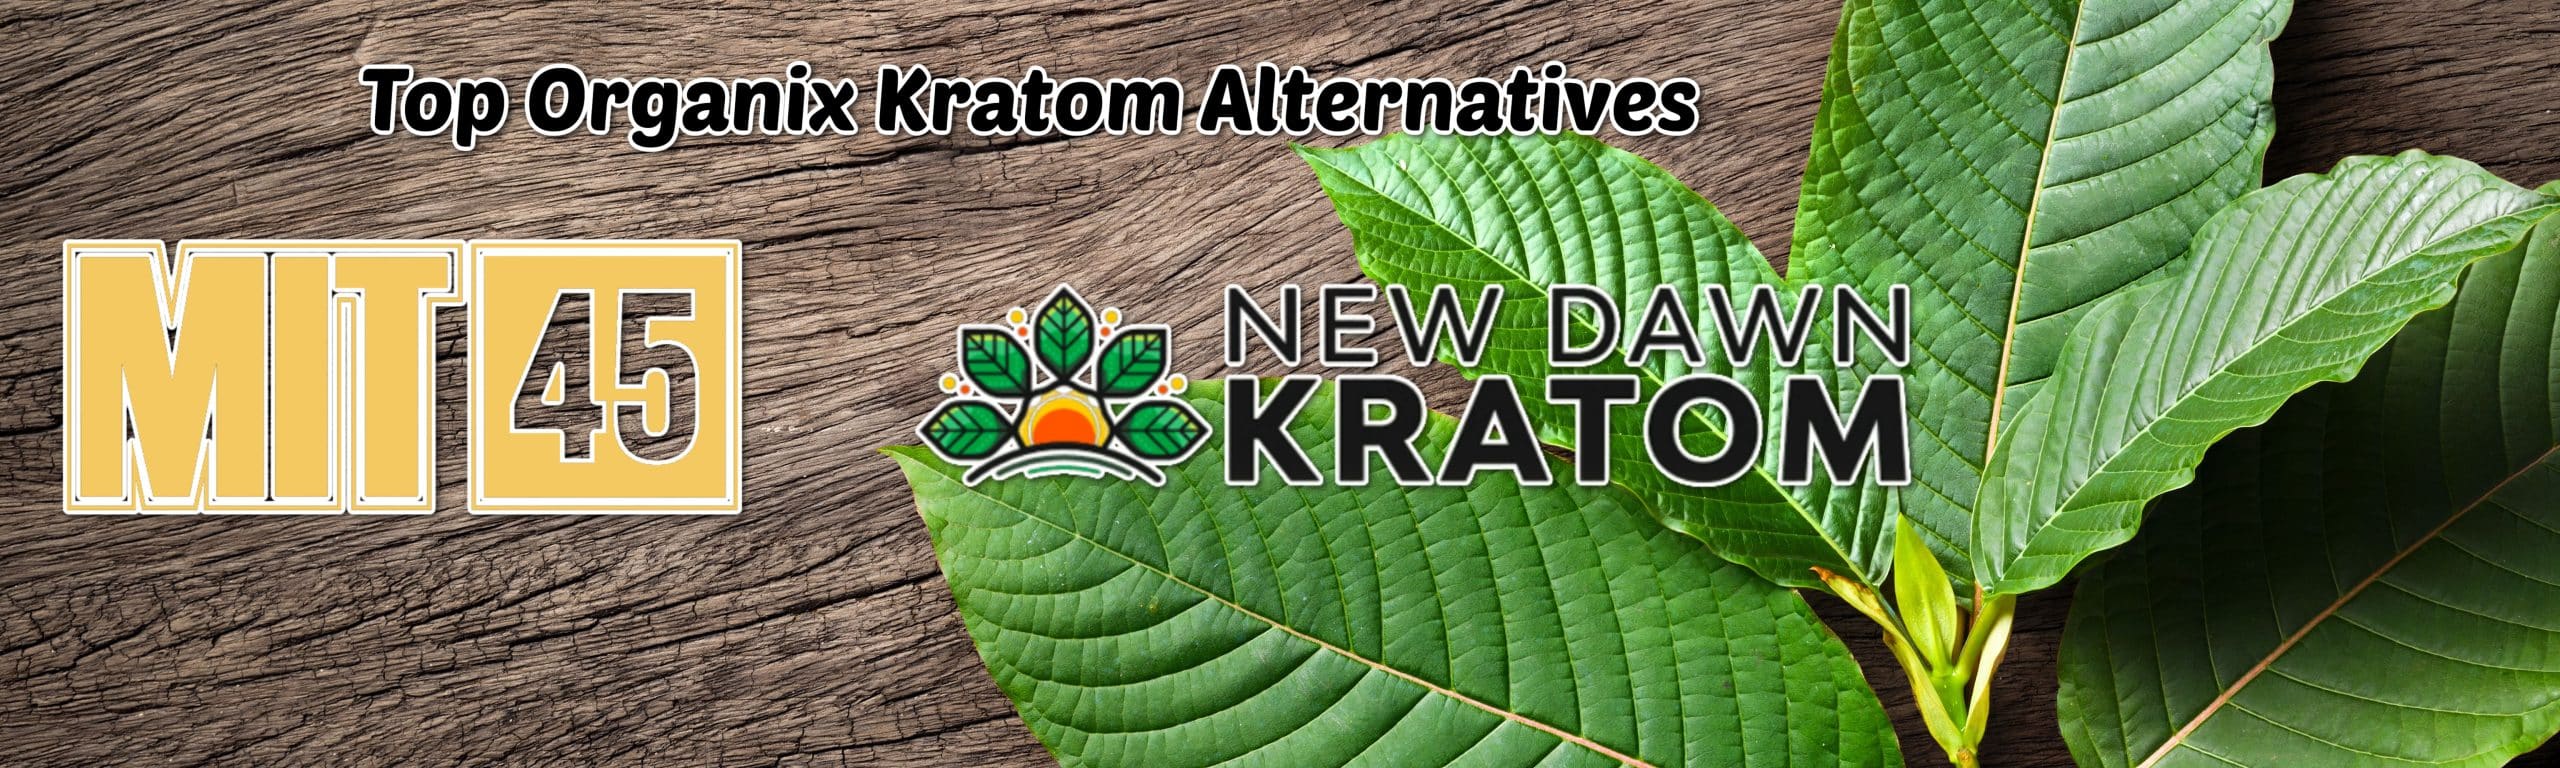 image of top organix kratom alternatives